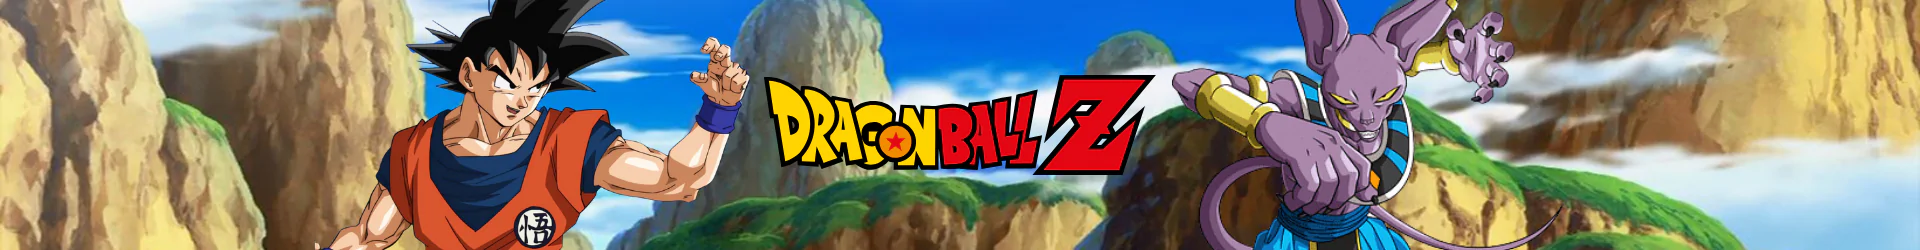 Dragon Ball turnbeutel banner